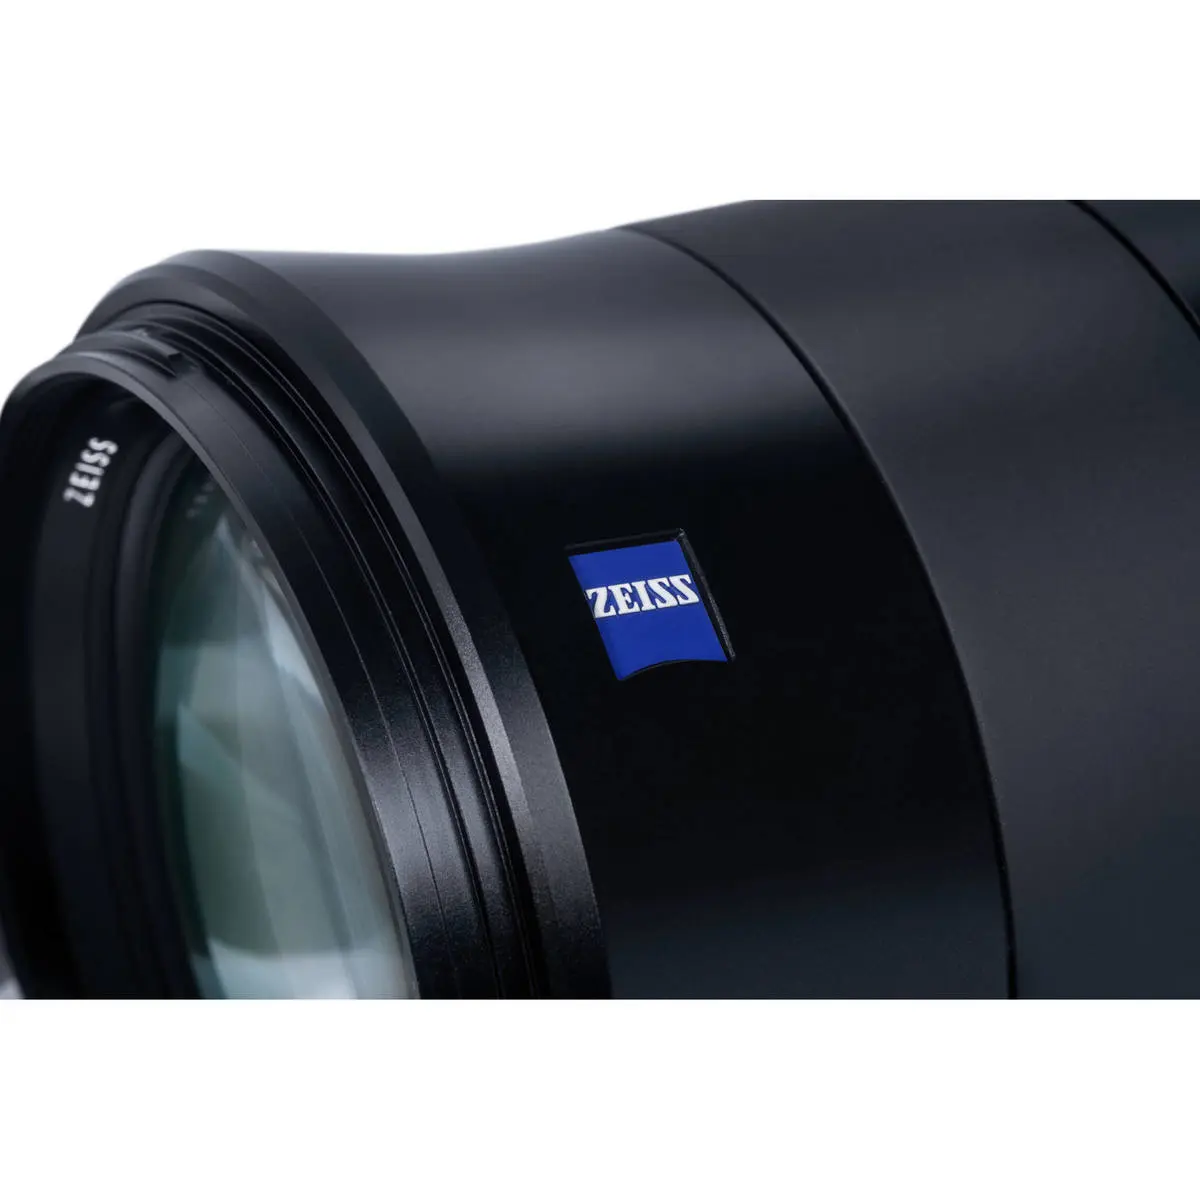 10. Carl Zeiss Otus 1.4/100 ZF.2 (Nikon) Lens